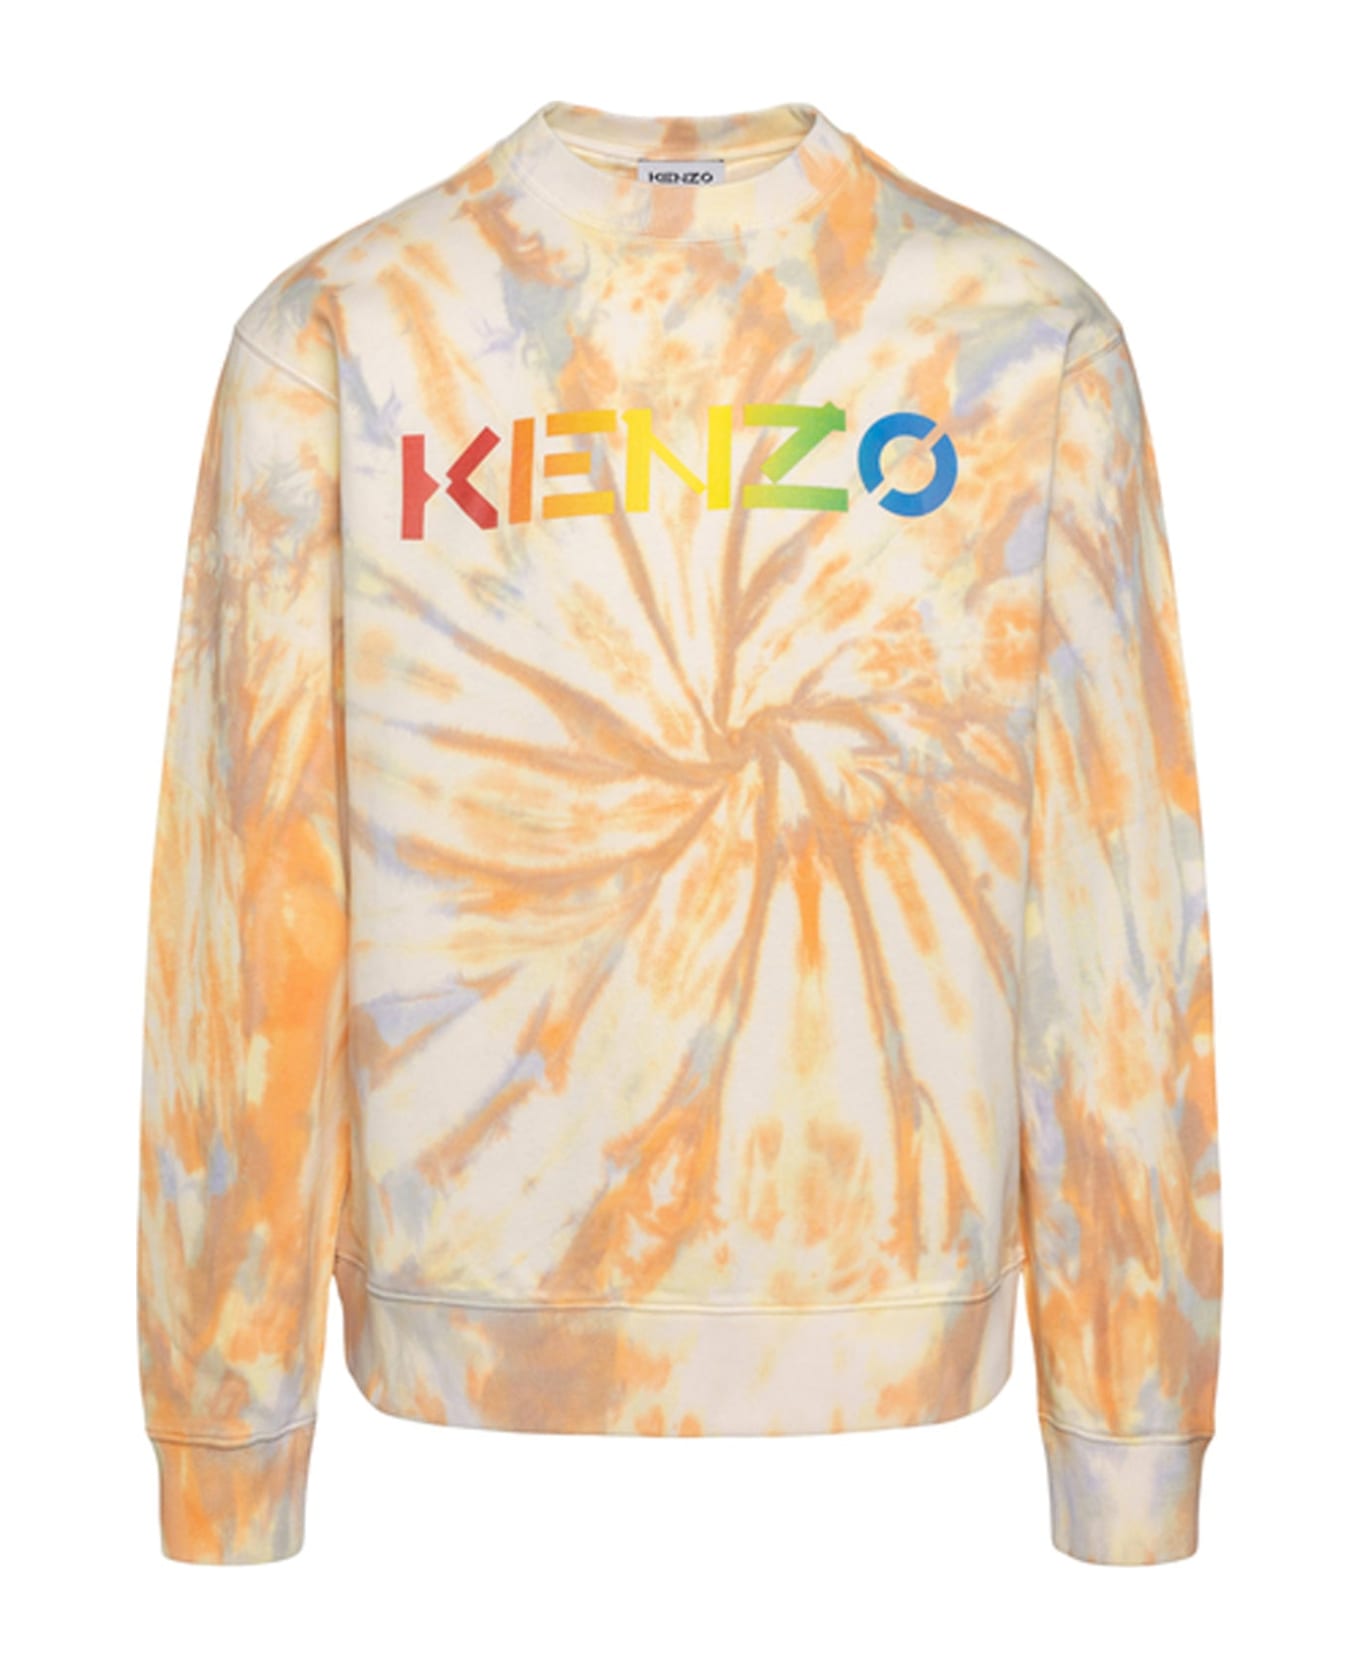 Kenzo Printed Sweatshirt - Orange